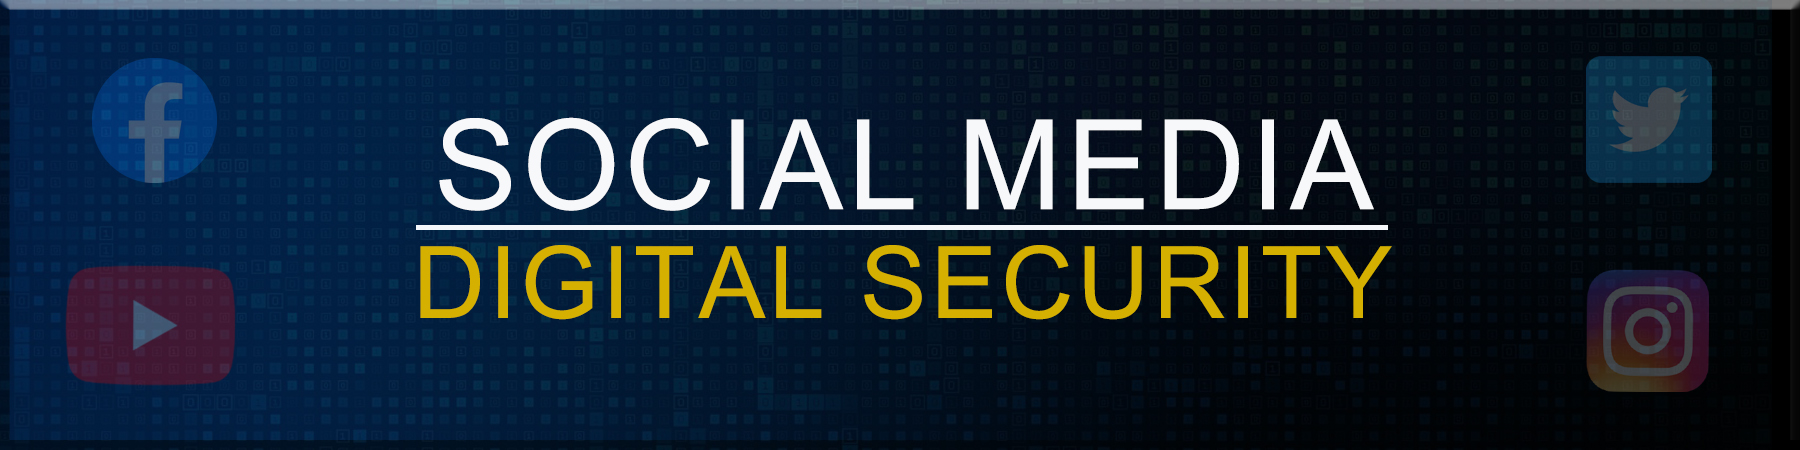 Link to Social Media Digital Security